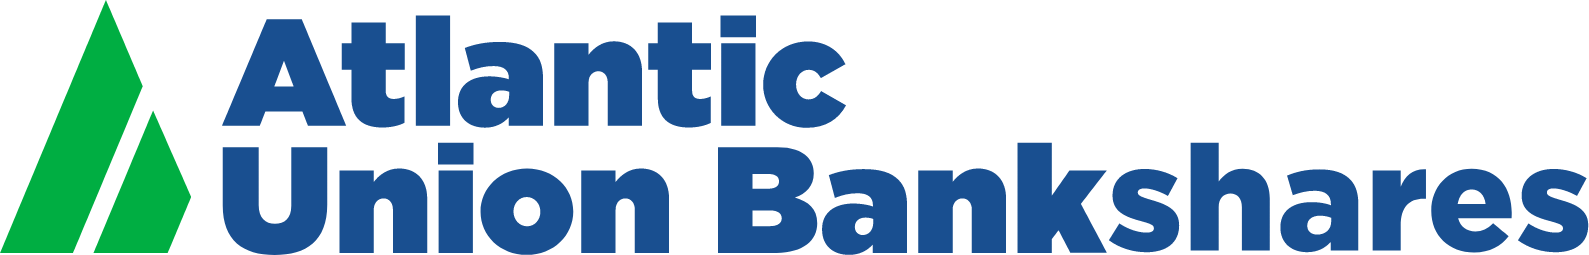 Atlantic Union Bankshares logo large (transparent PNG)